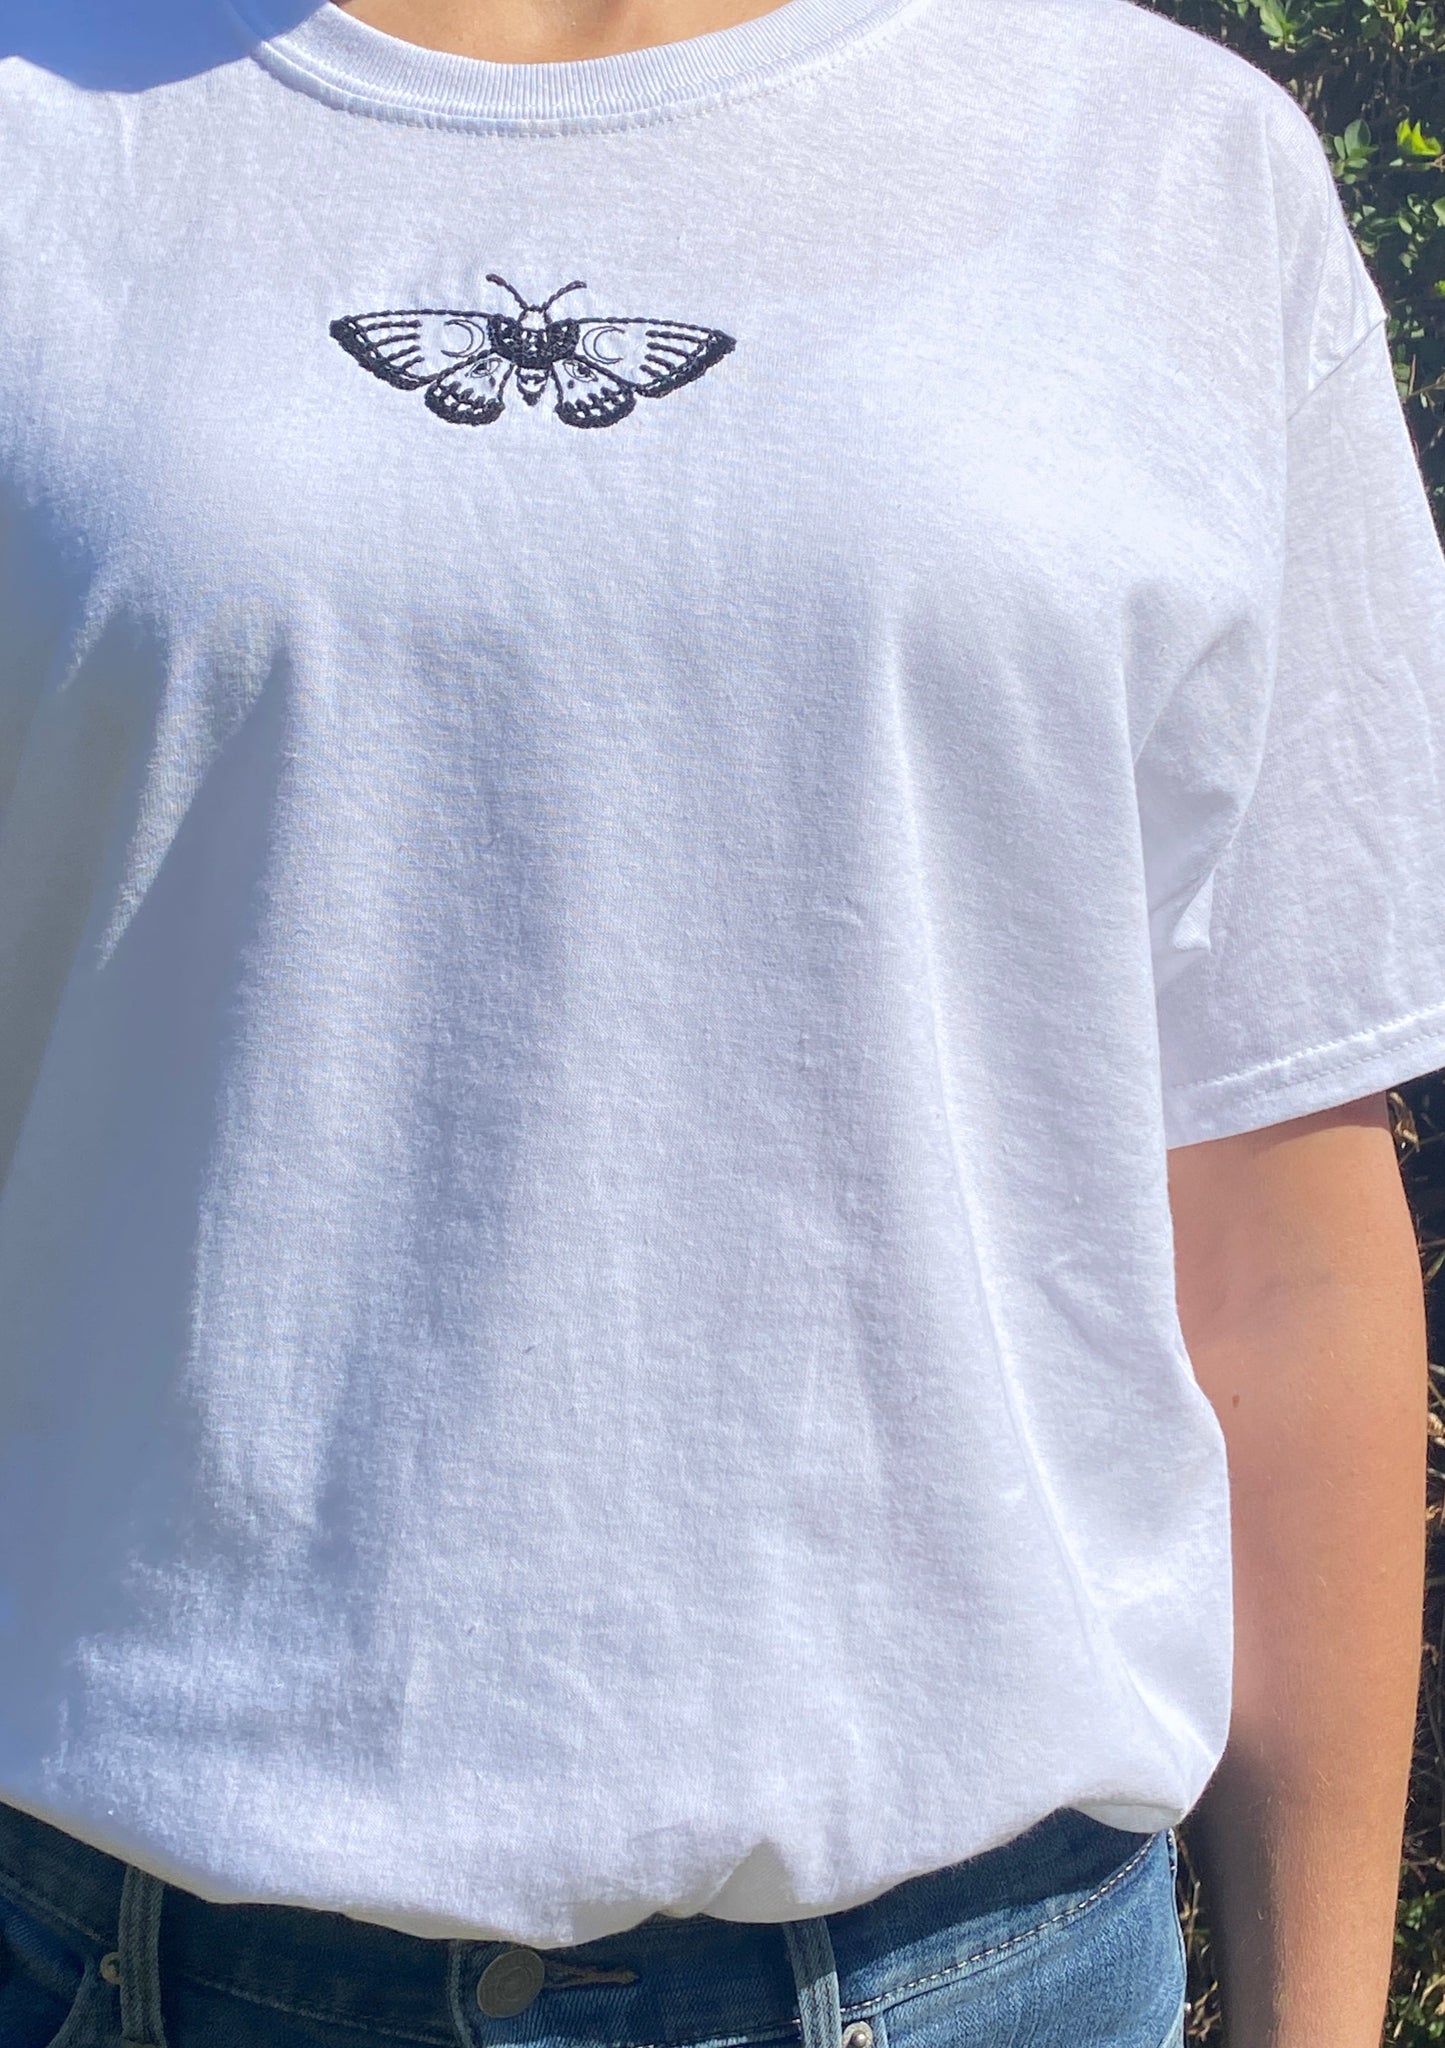 Luna Moth Embroidered Tshirt